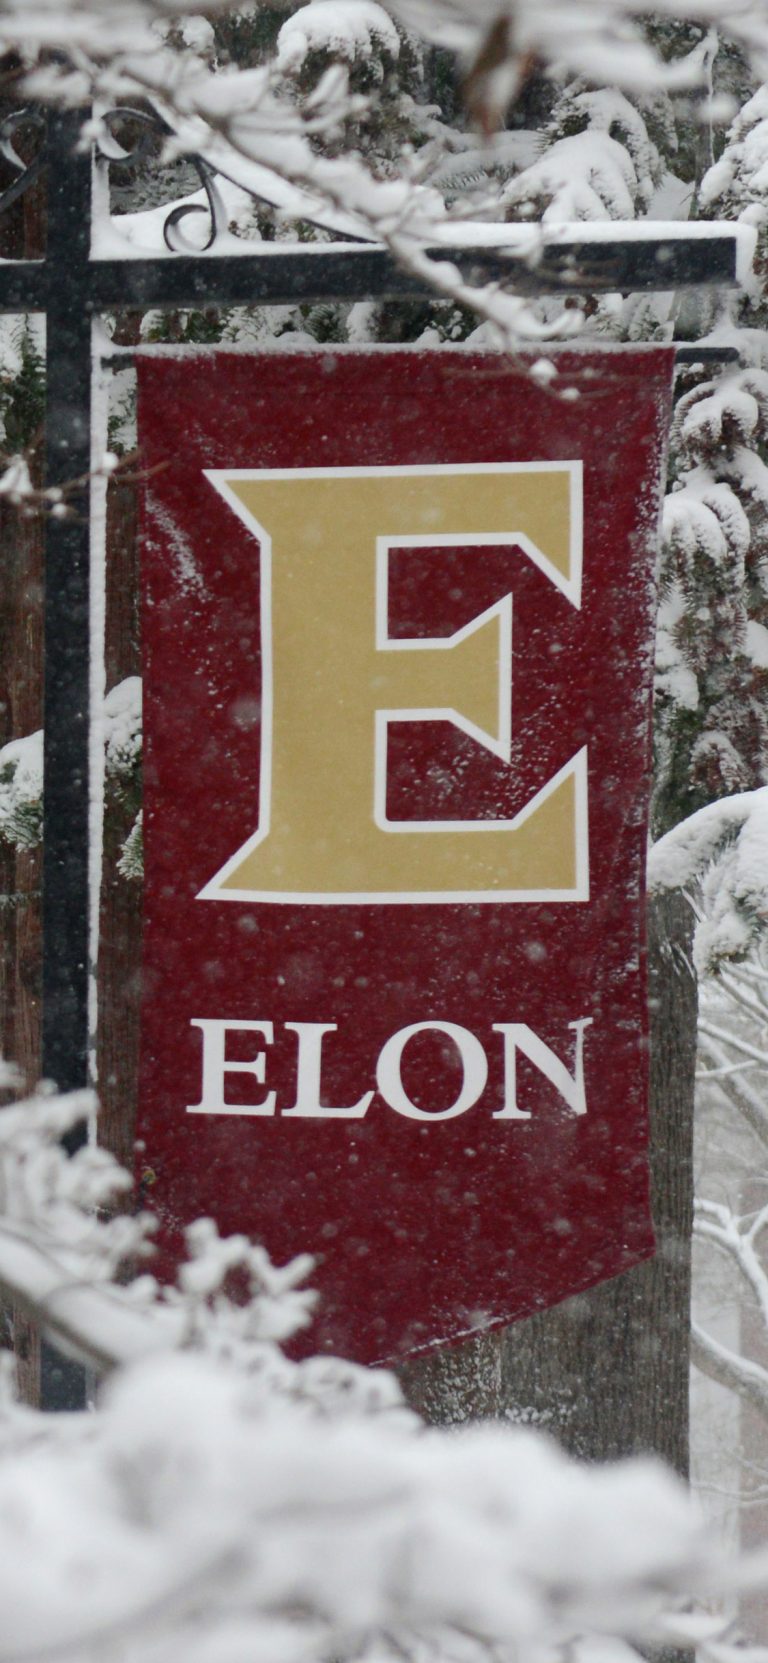 Elon University banner covered in snow.